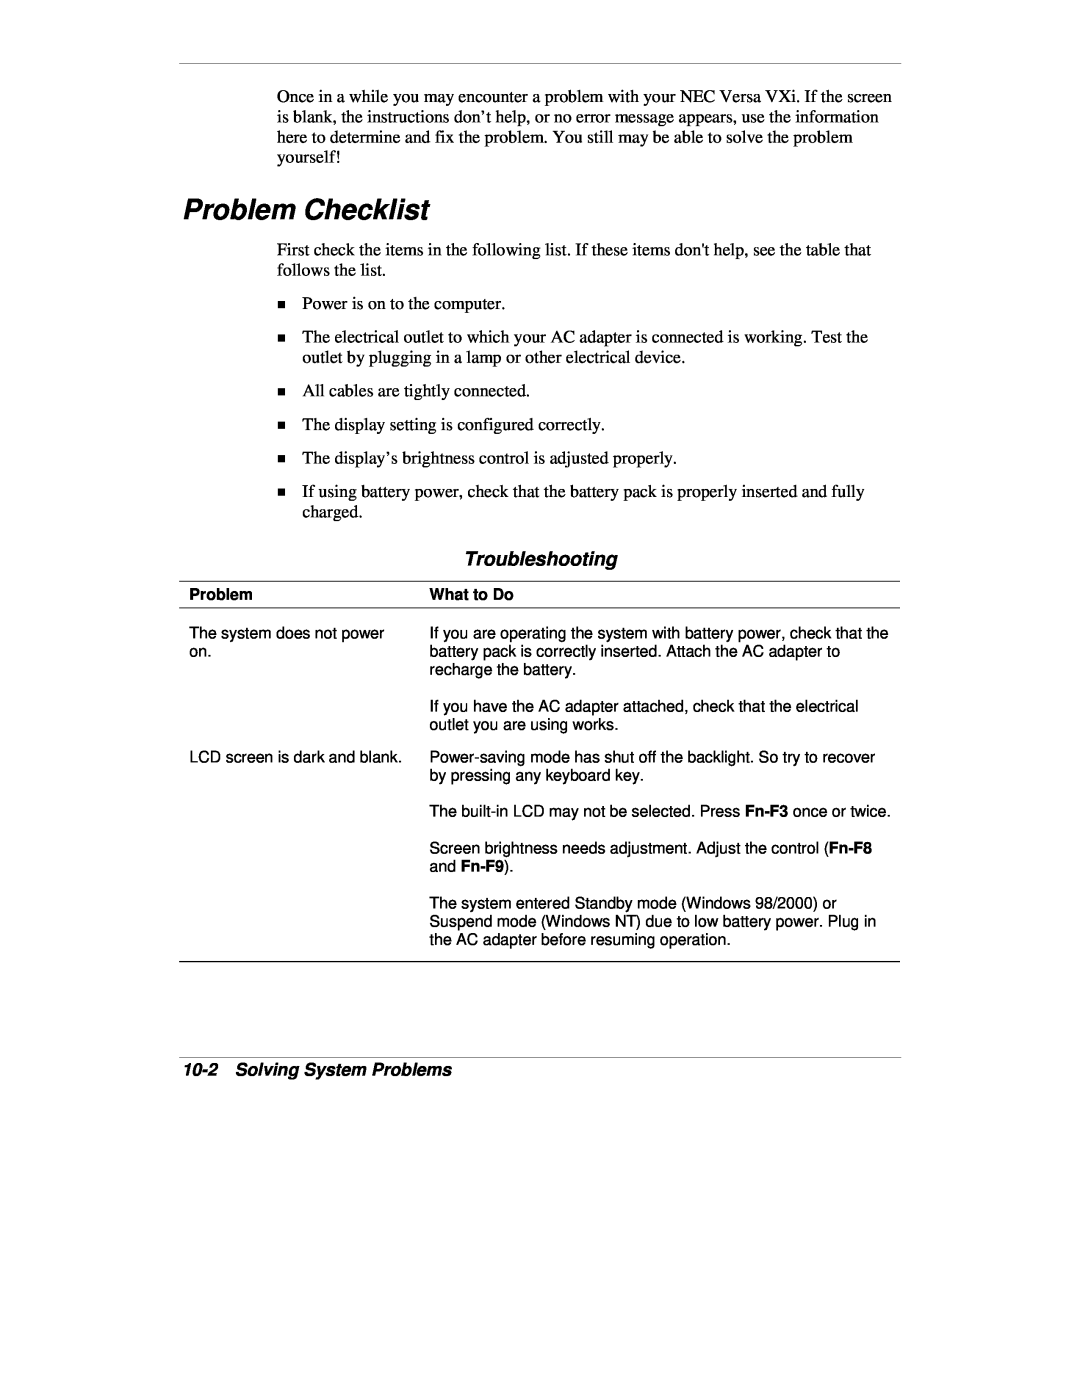 NEC VXi manual Problem Checklist, Troubleshooting, 10-2Solving System Problems 